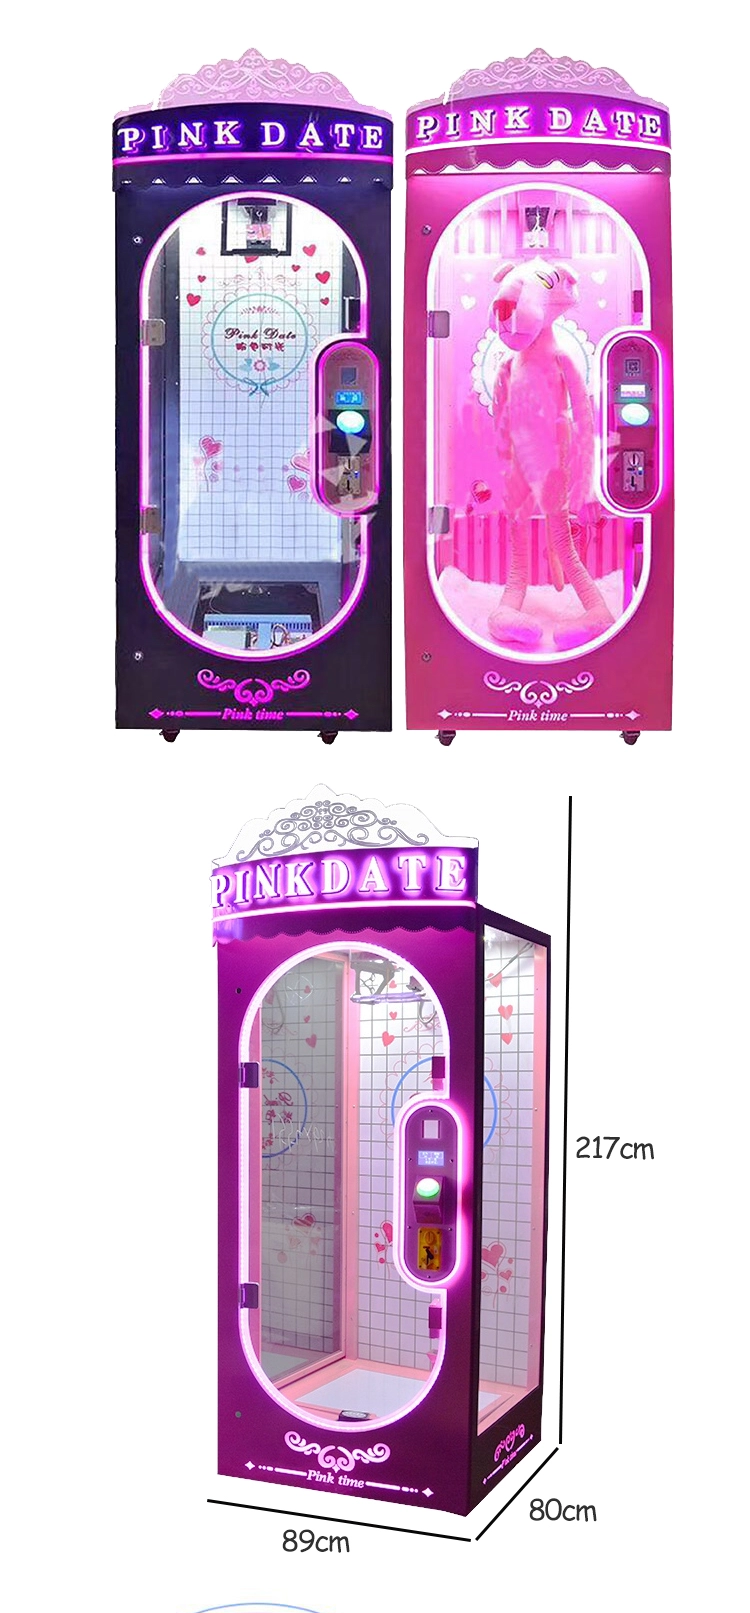 Pink Date Arcade gift game machine